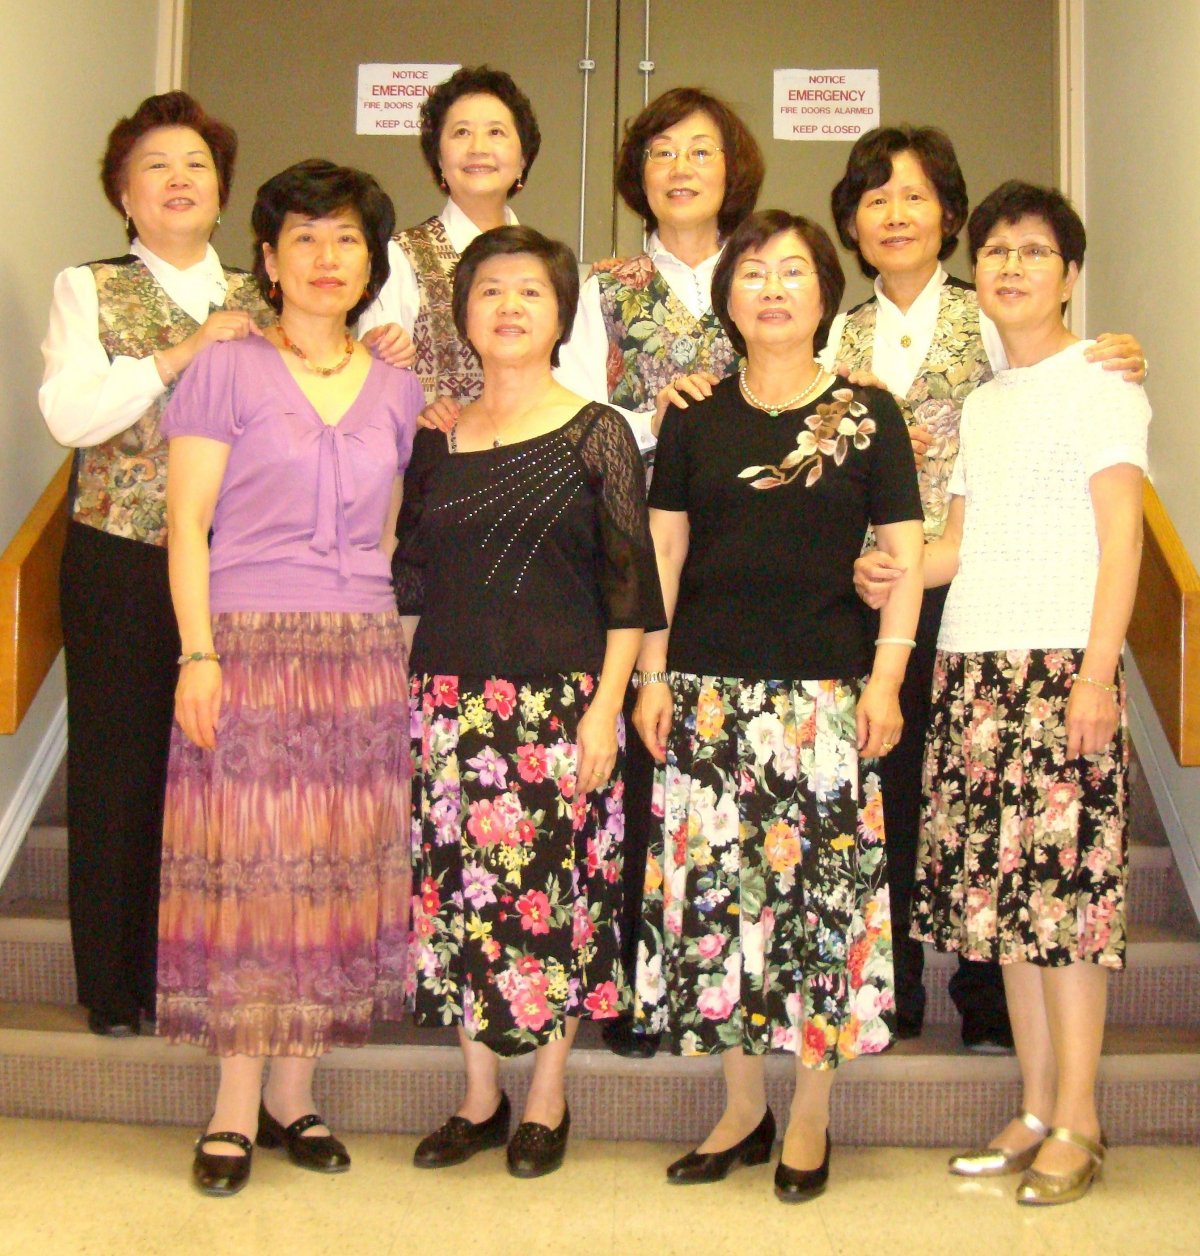 Kathy Lin's International Folk Dance Group, Older Adult Centre, Performance October 3, 2010